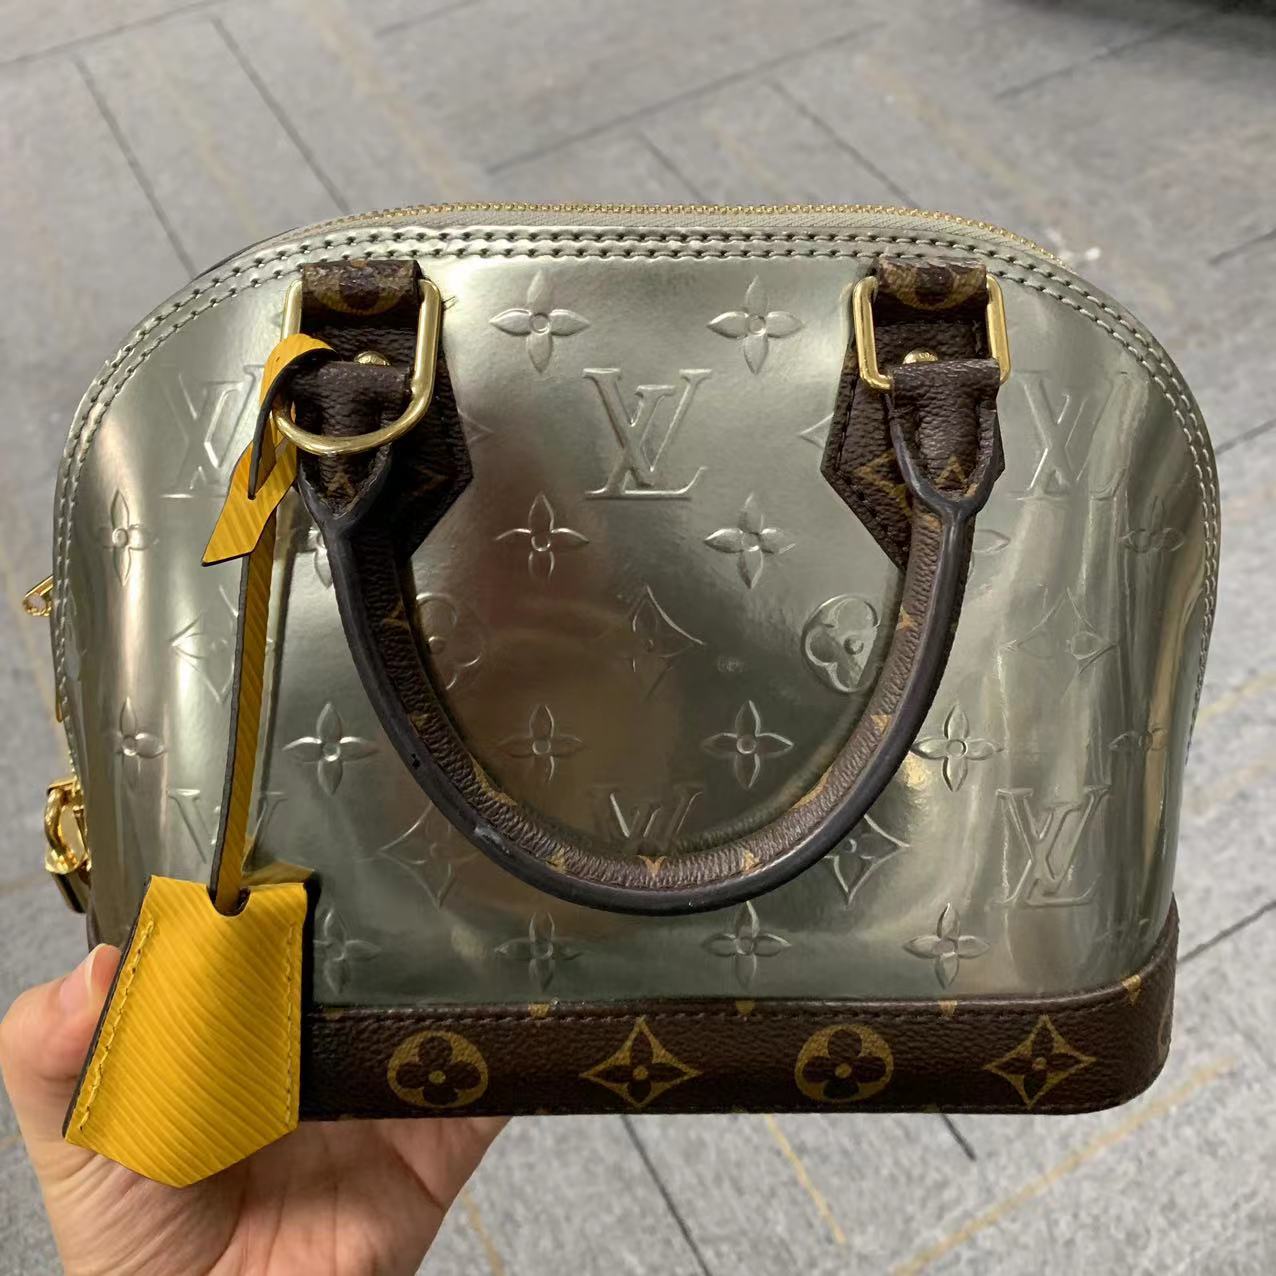 Louis Vuitton Alma Patent Leather Handbag